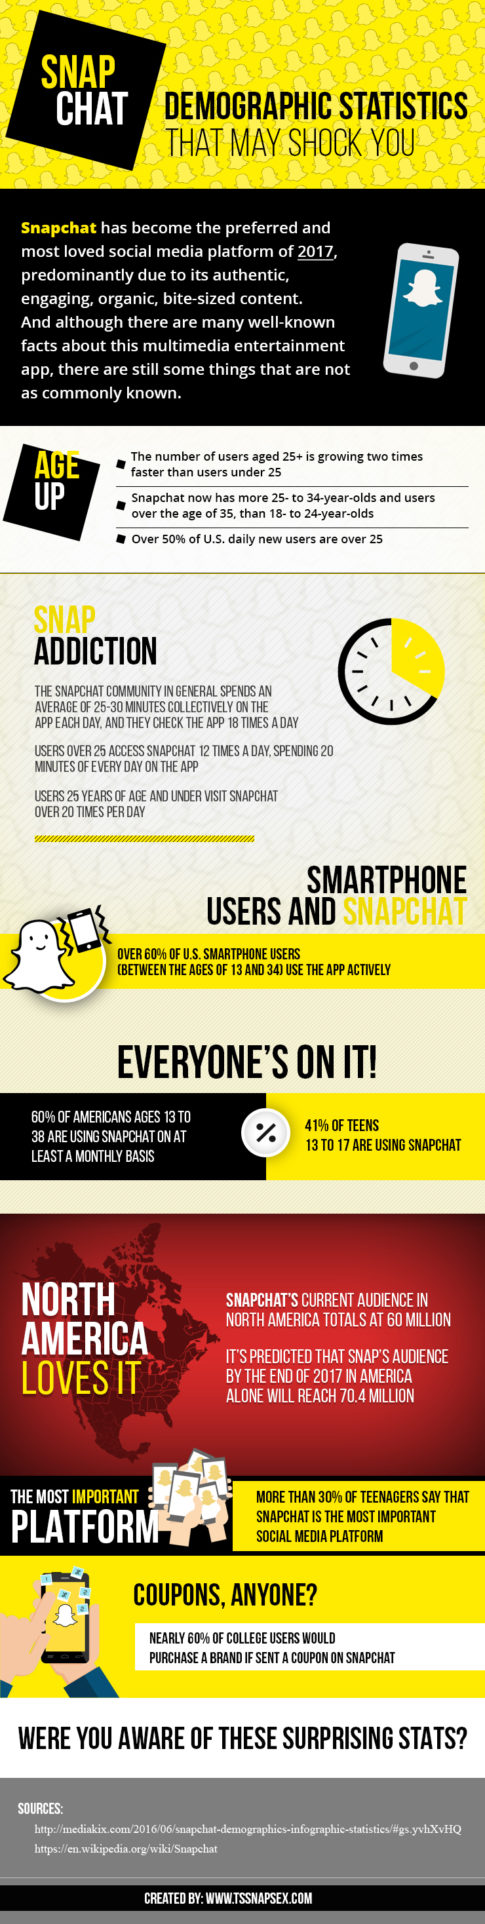 Snapchat Demographic Statistics That May Shock You